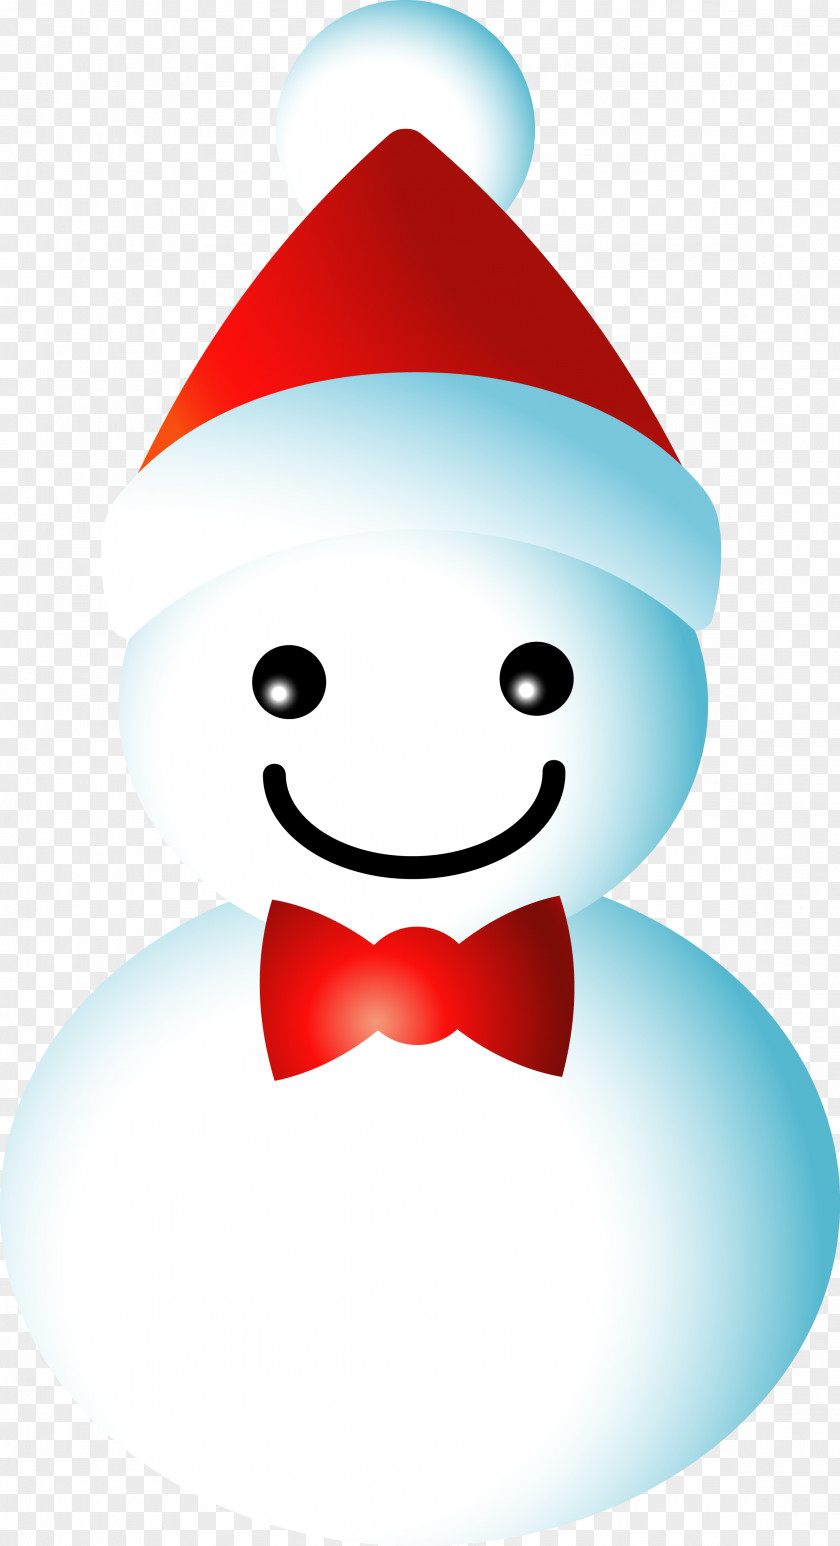 Snowman Santa Claus Christmas Ornament Desktop Wallpaper Clip Art PNG